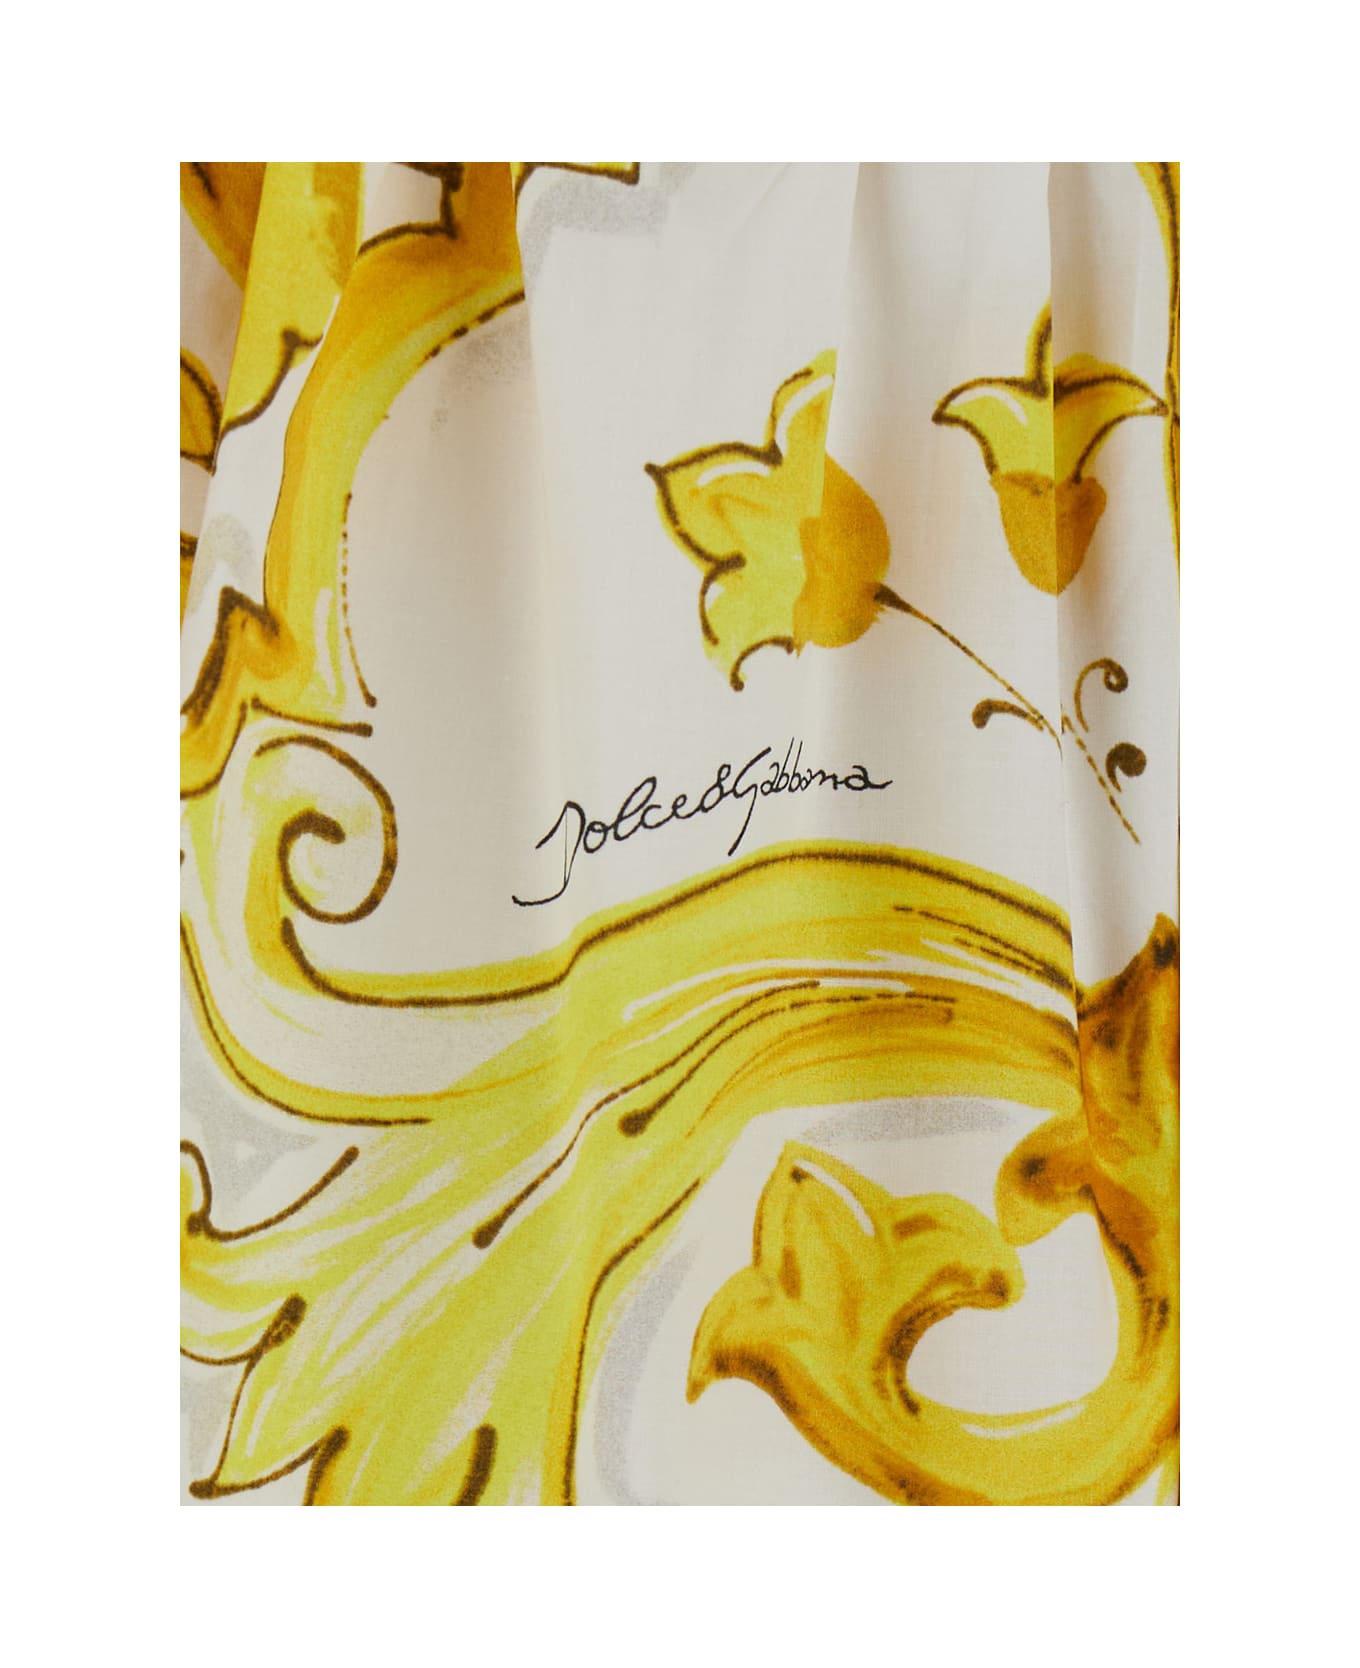 Dolce & Gabbana Yellow Round Miniskirt With Majolica Print In Cotton Woman - Yellow